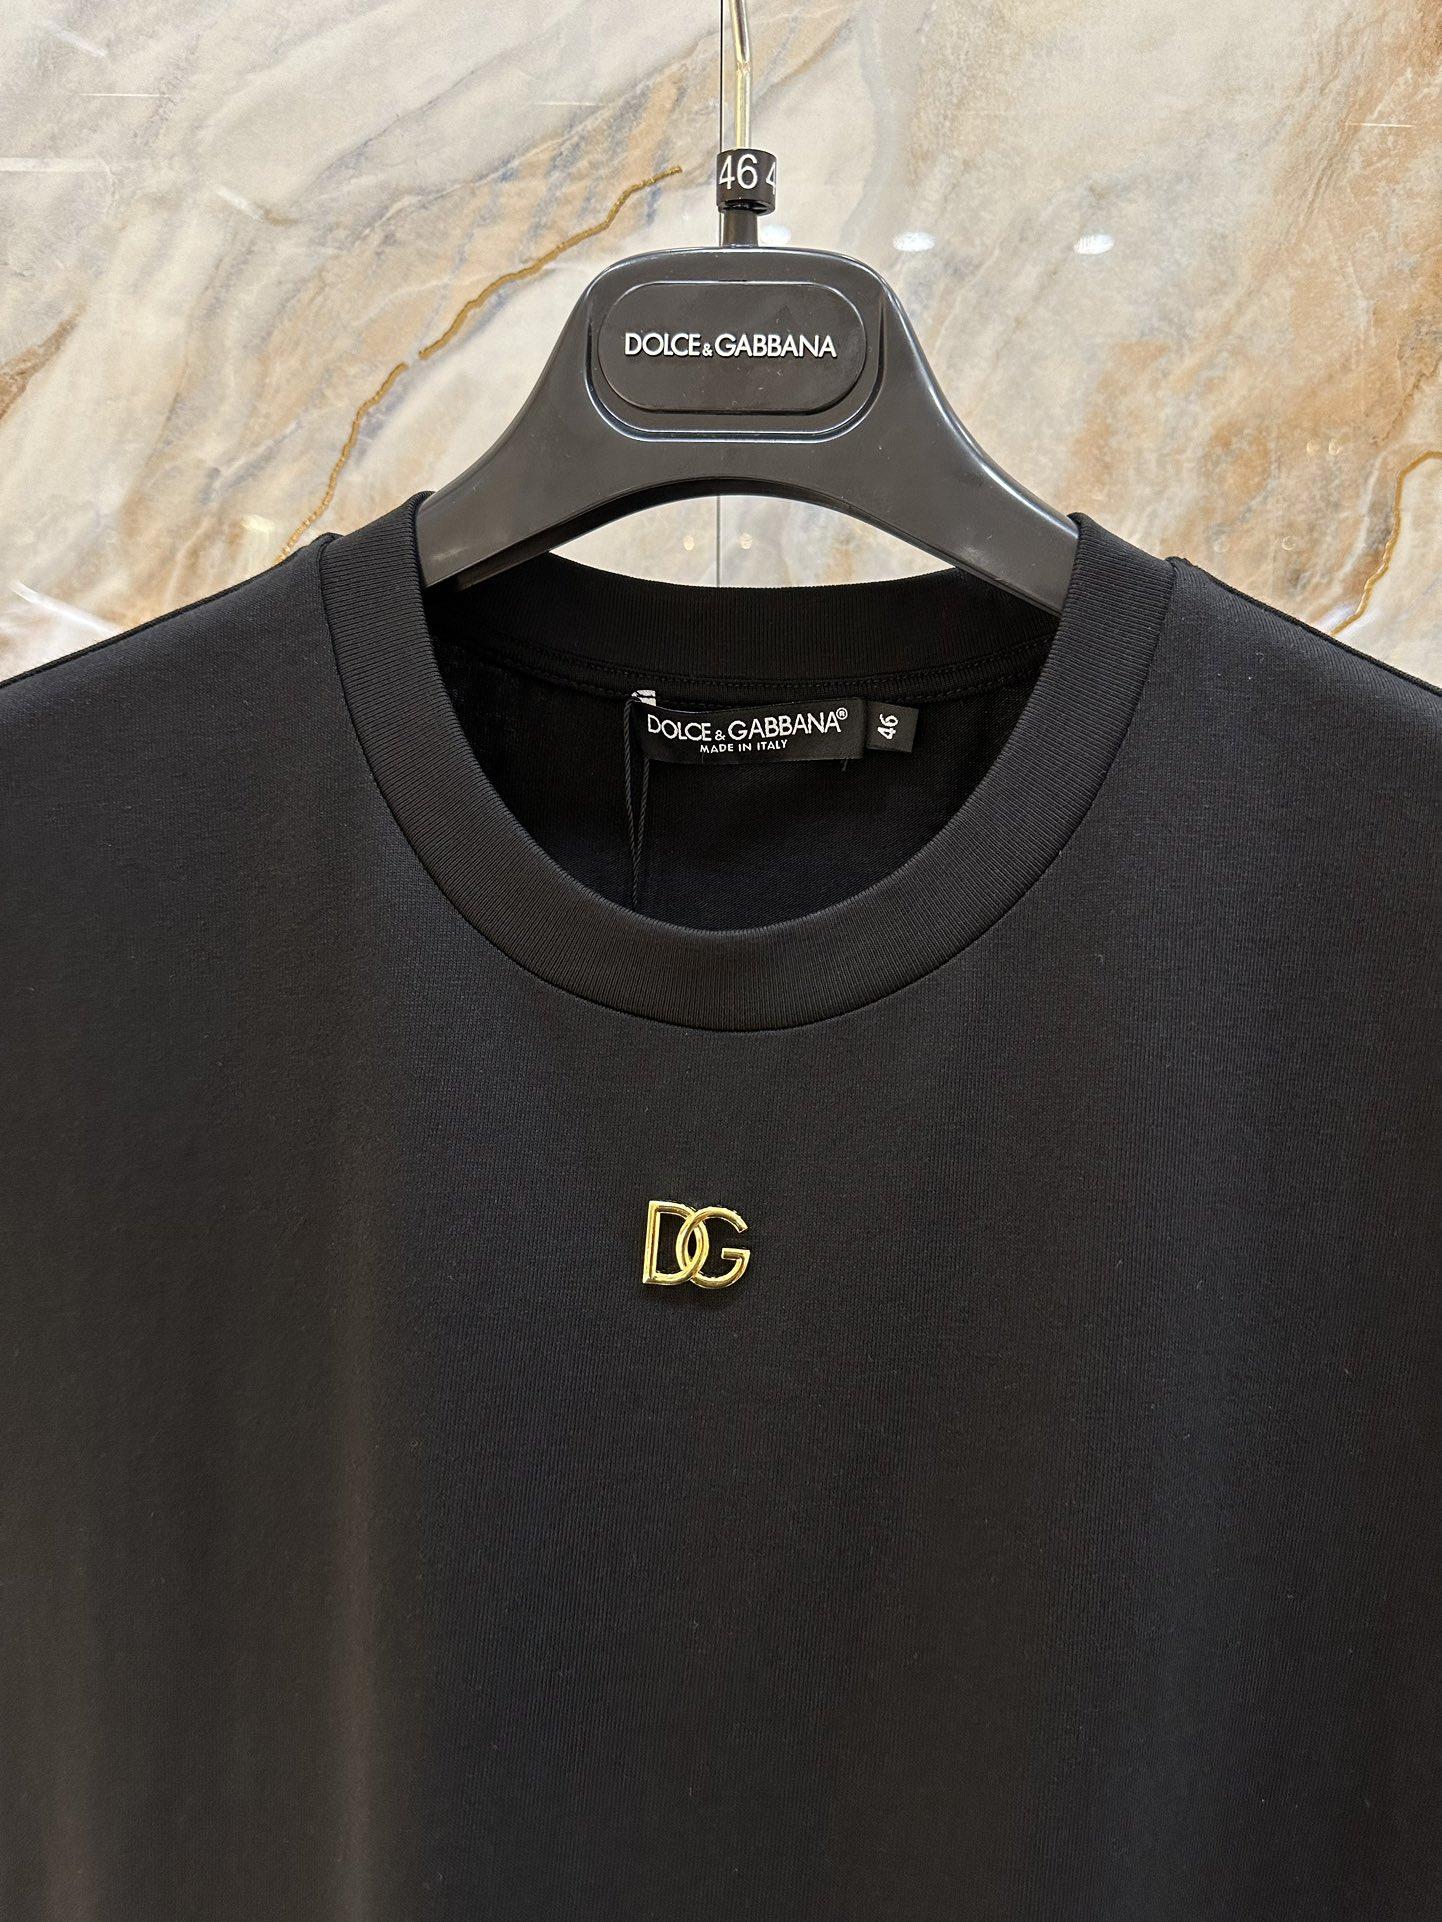 cotton-t-shirt-with-metallic-dg-logo-7173_16845017964-1000